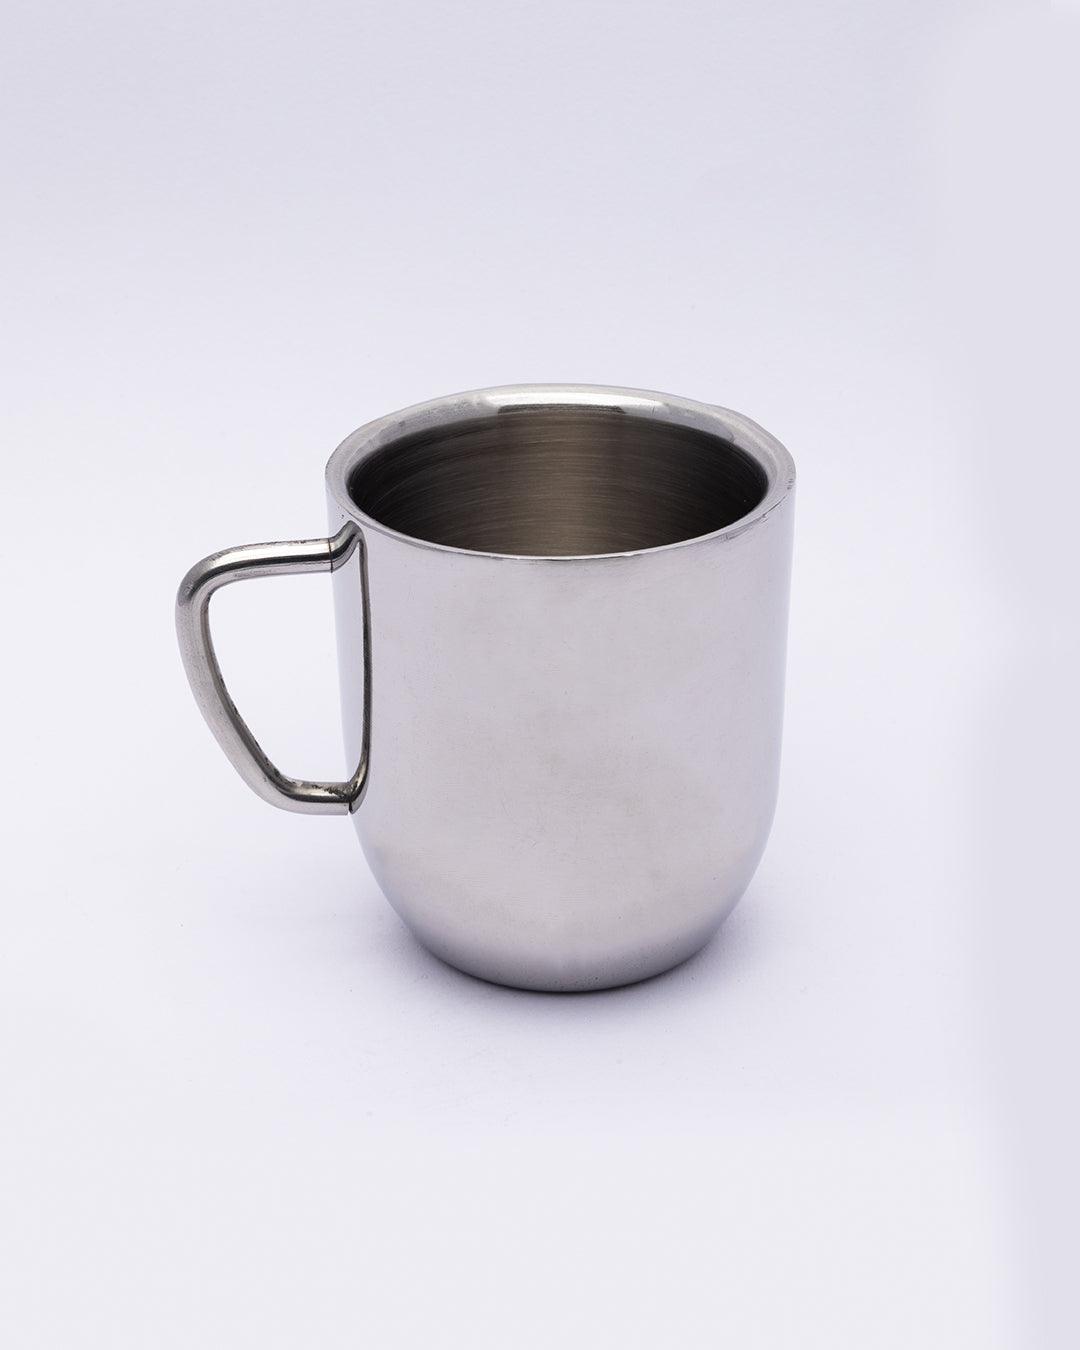 stainless steel mugs tea and coffee mugs silver stainless steel set of 2 mug 2 29021082845354